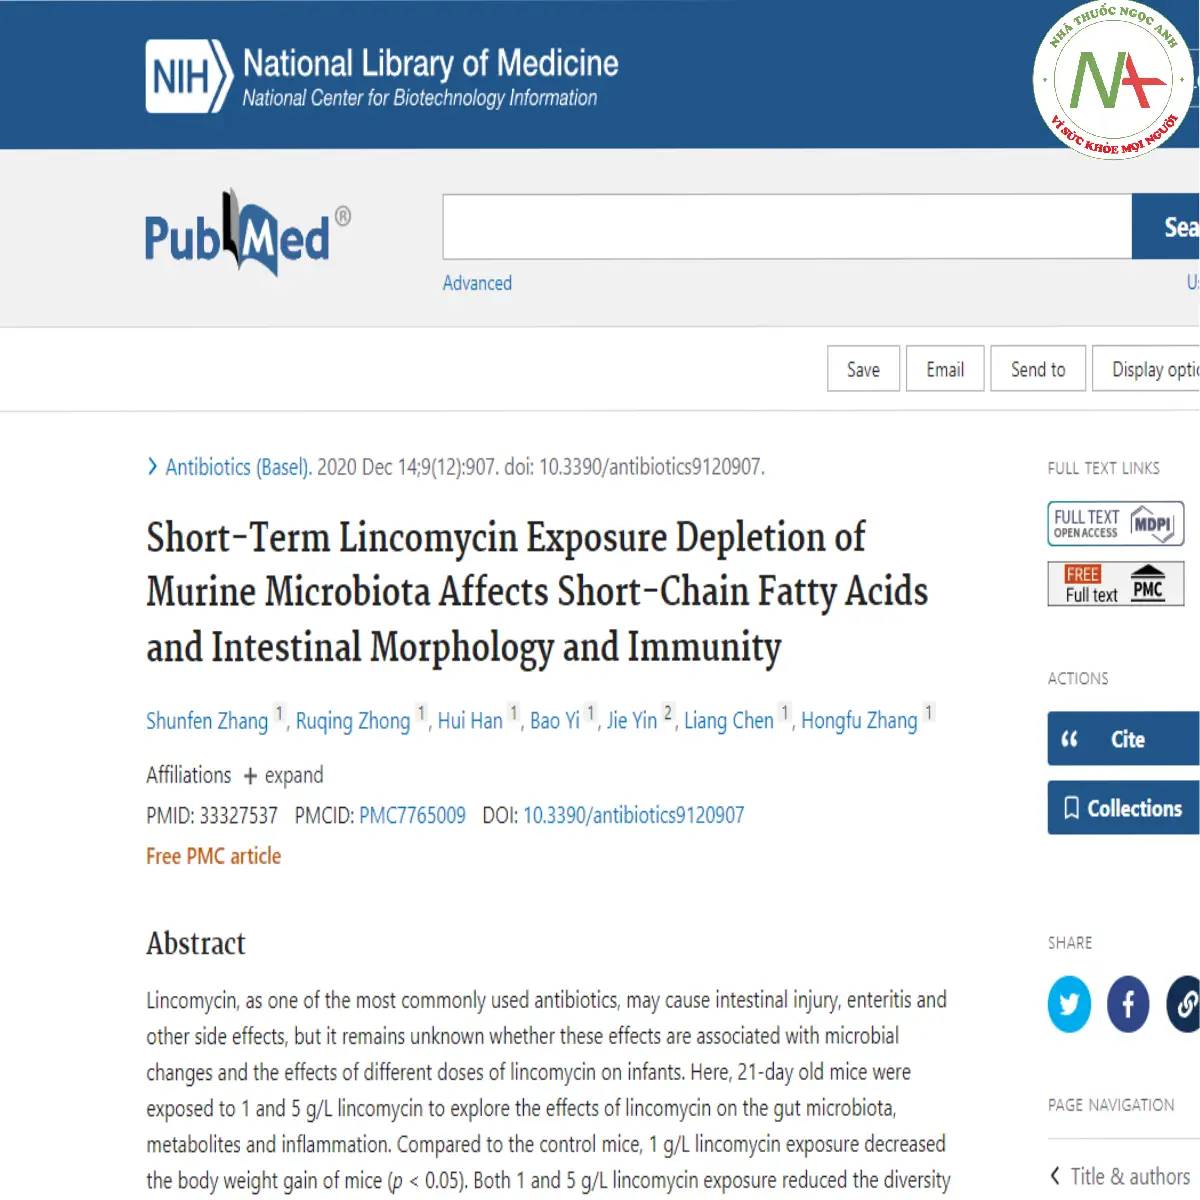 Short-Term Lincomycin Exposure Depletion of Murine Microbiota Affects Short-Chain Fatty Acids and Intestinal Morphology and Immunity